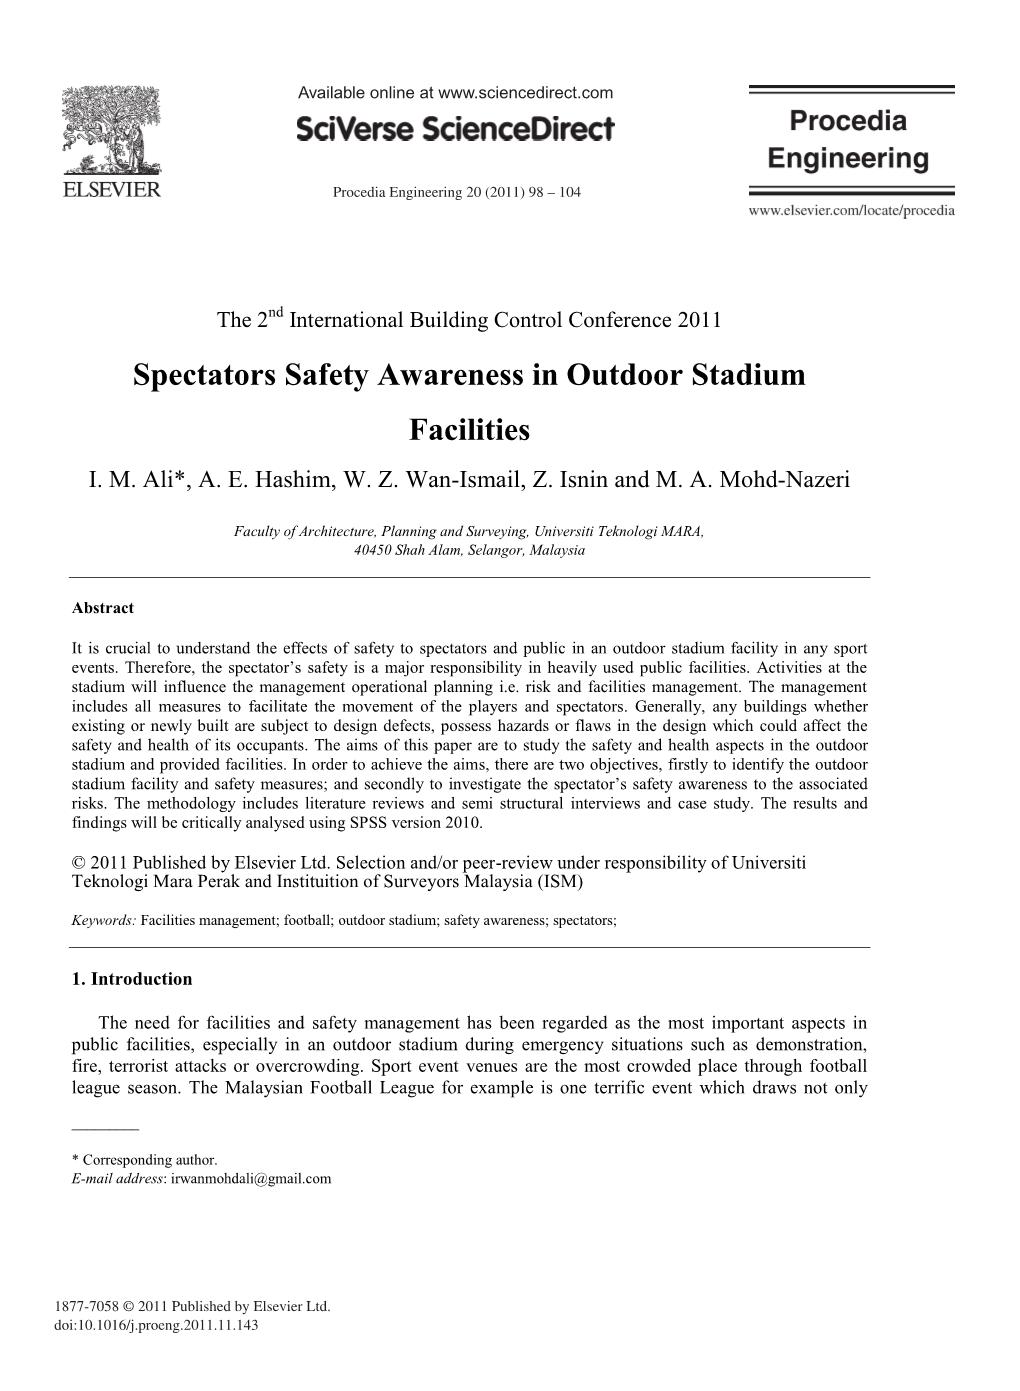 Spectators Safety Awareness in Outdoor Stadium Facilities I